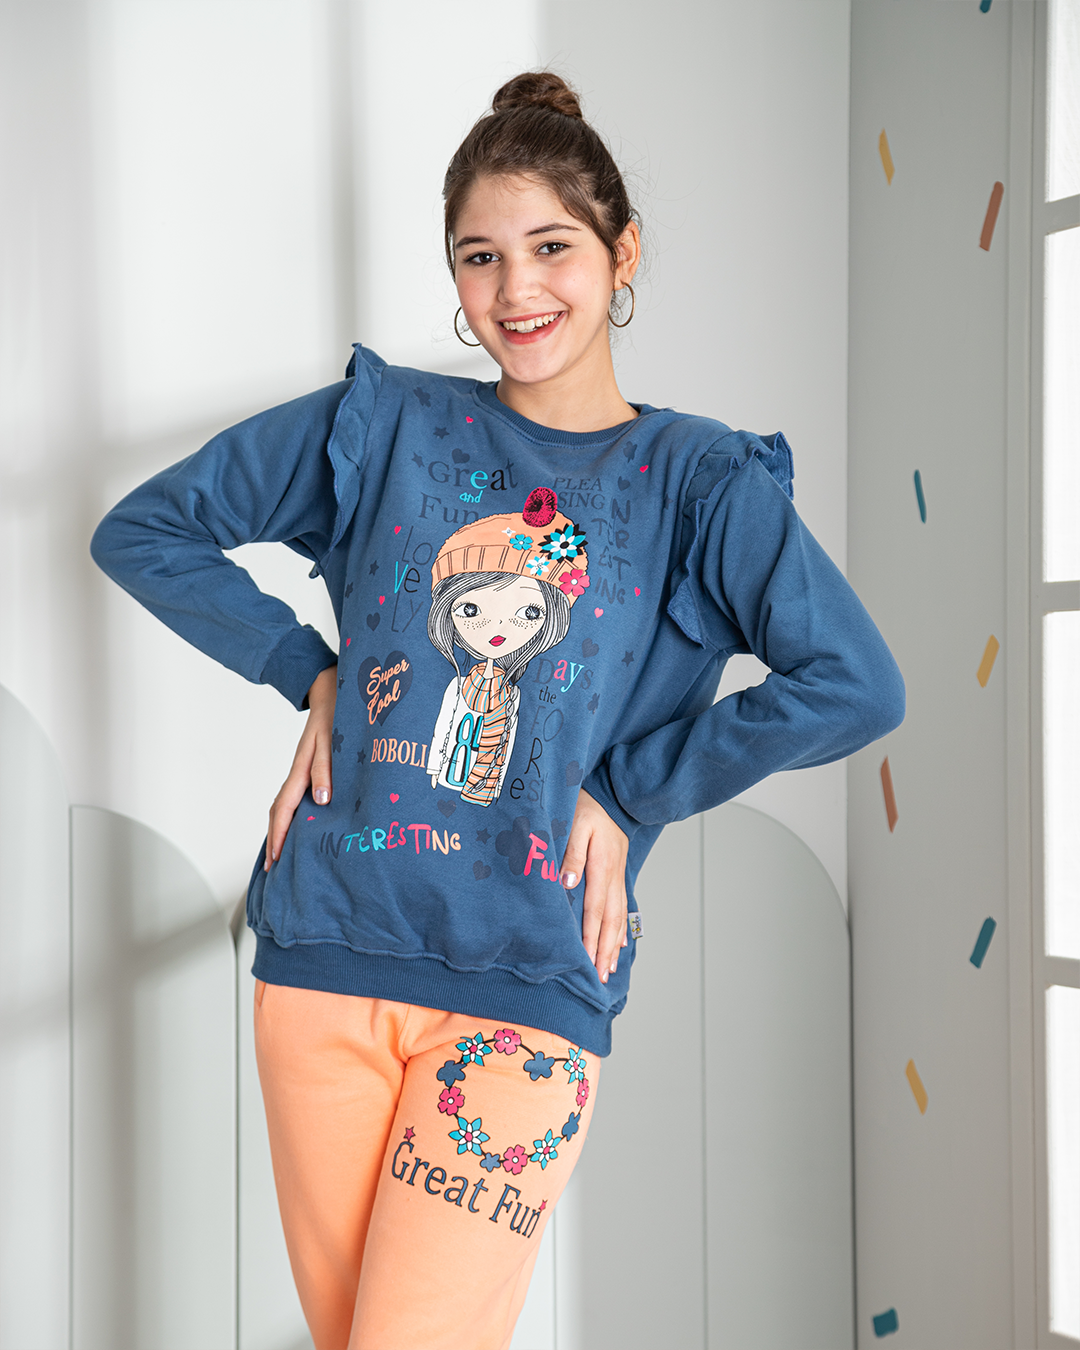 Great and fun girls' pajamas